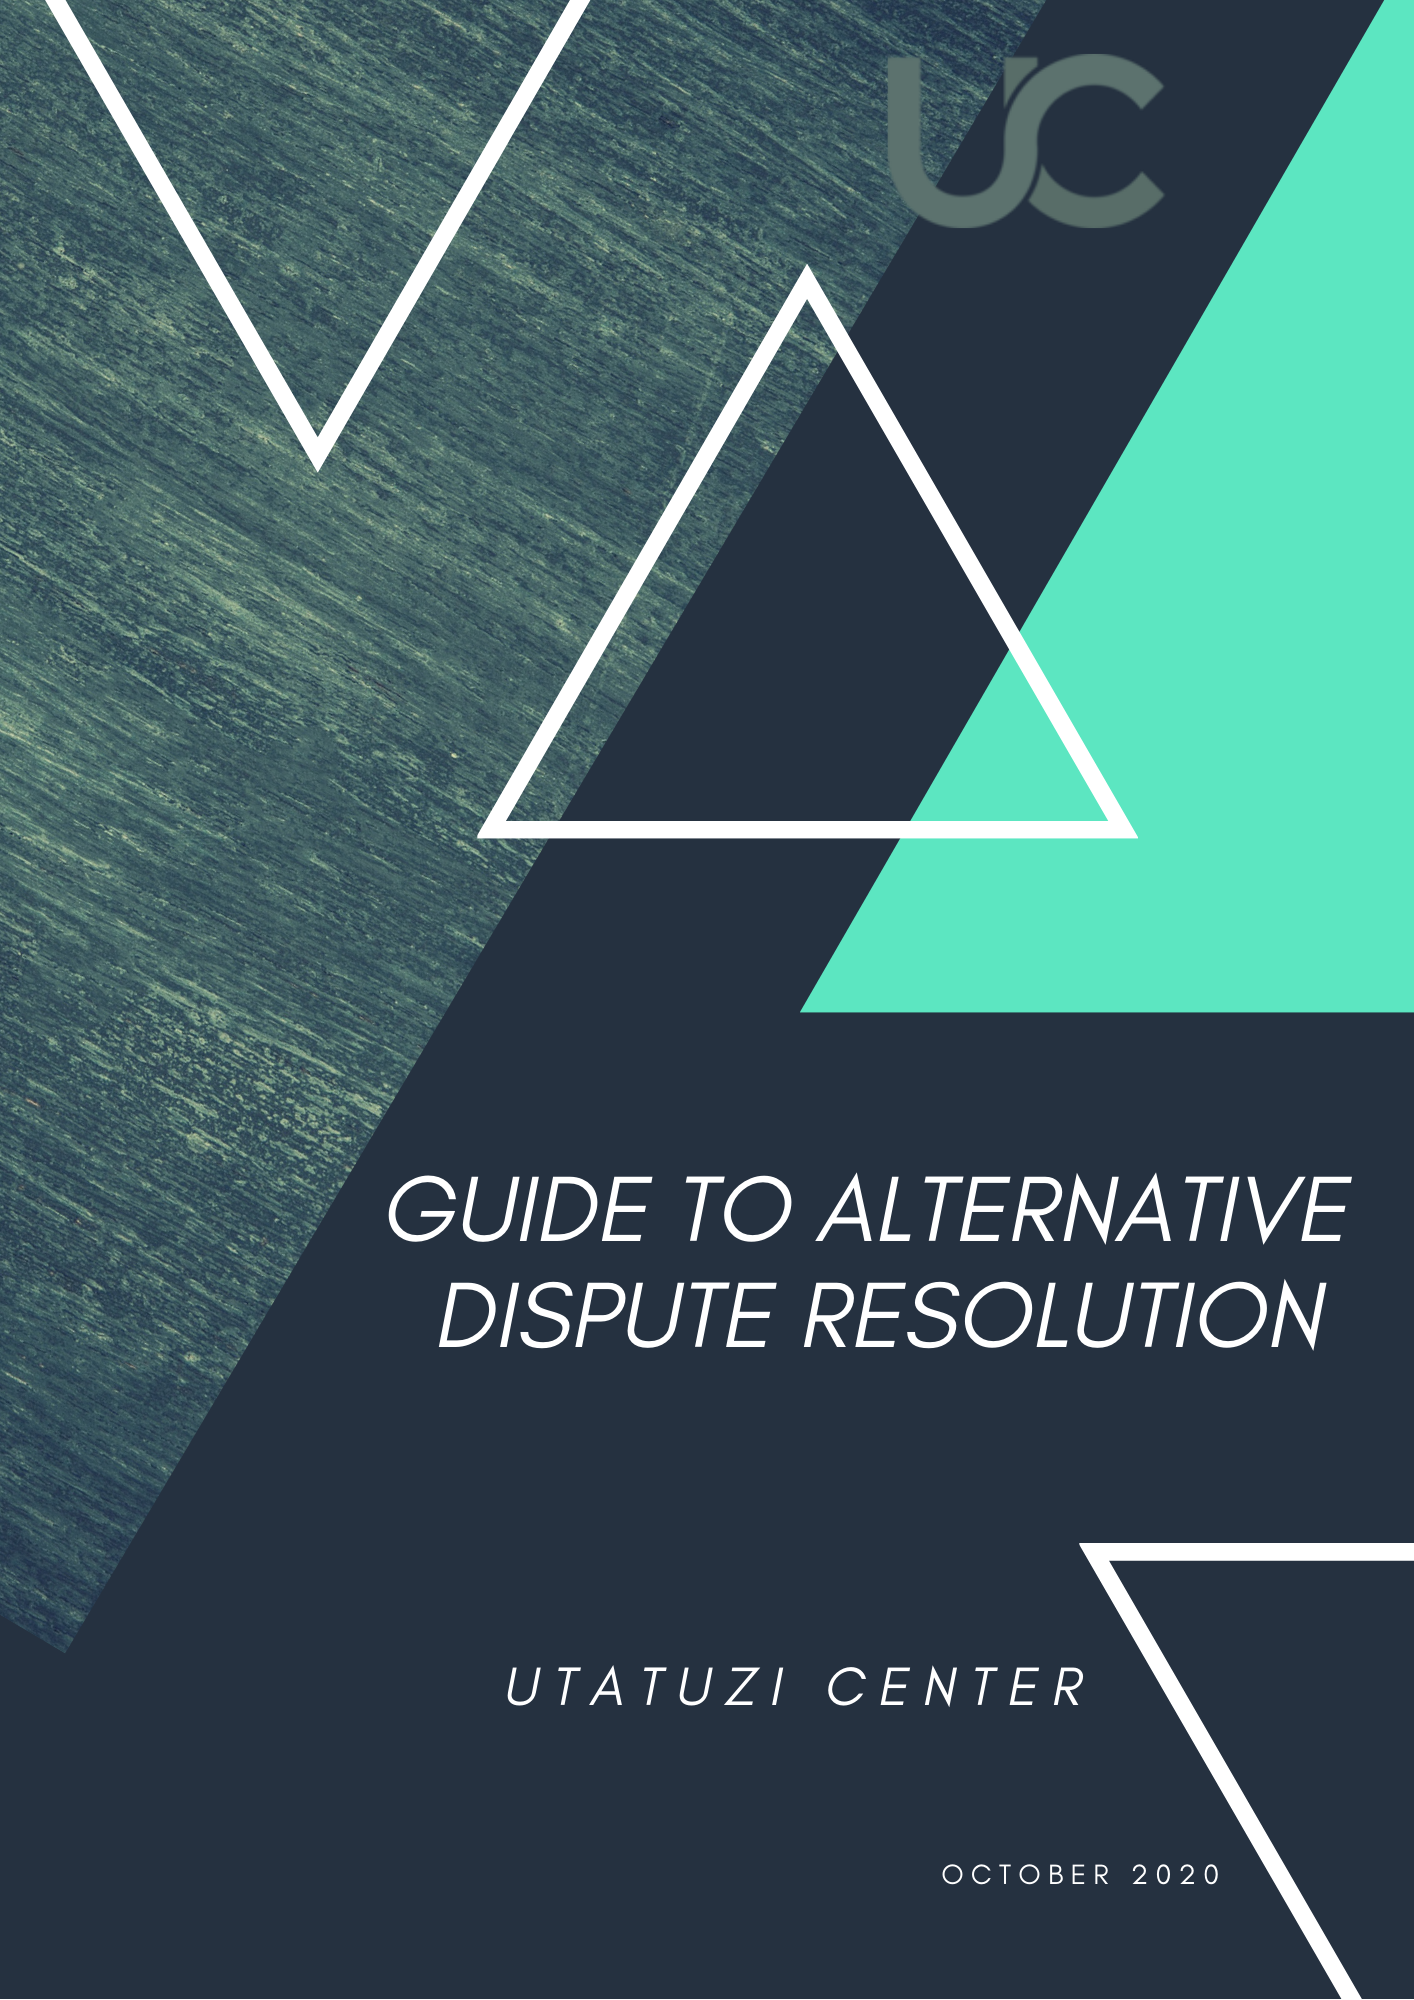 Alternative Dispute Resolution Guide